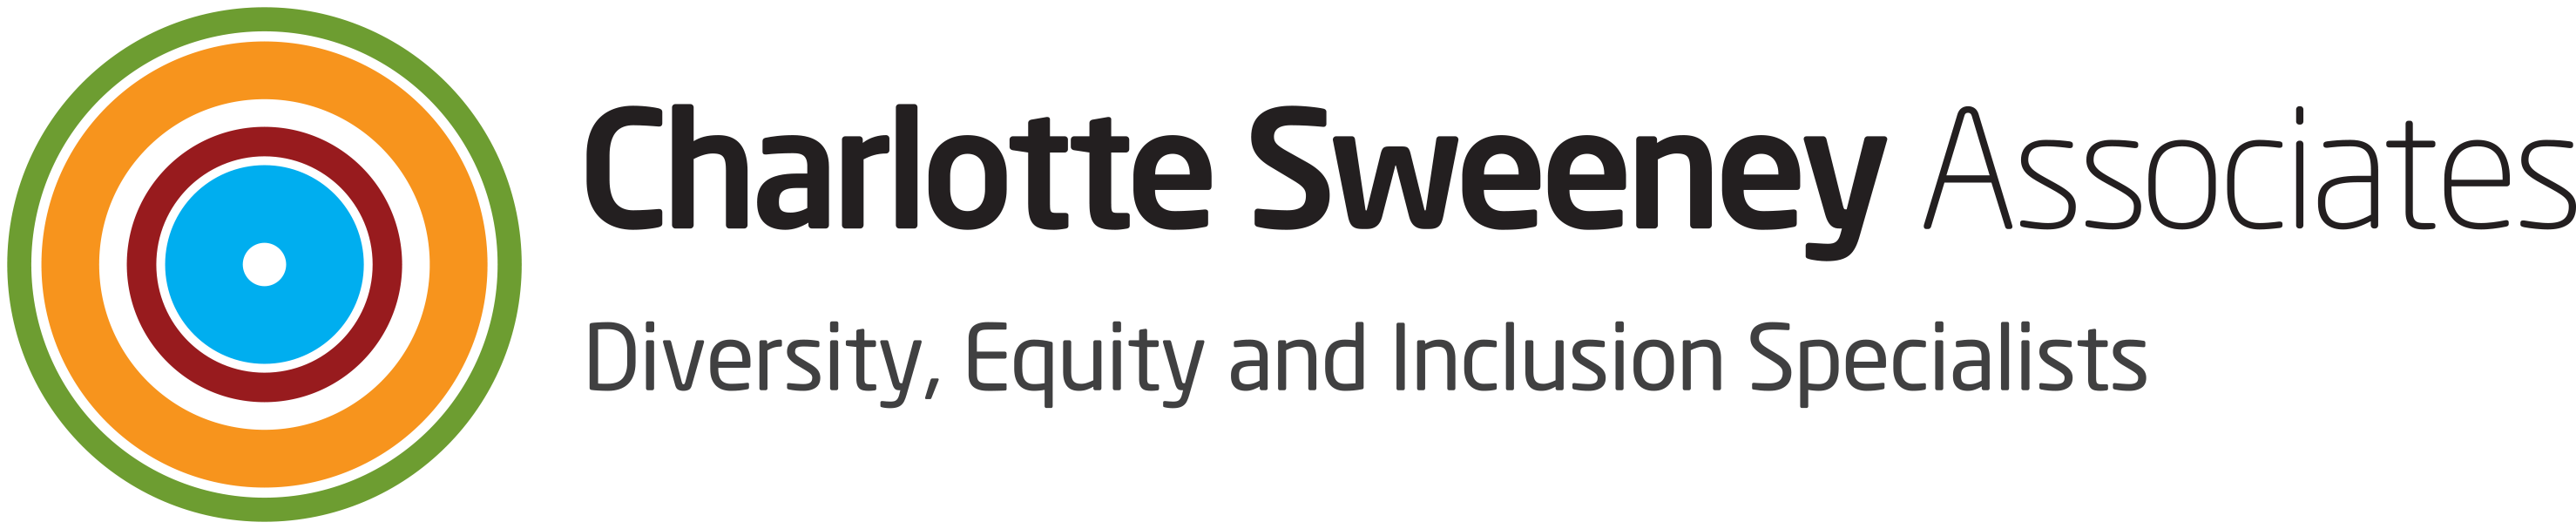 logo for Charlotte Sweeney Associates (CSA)